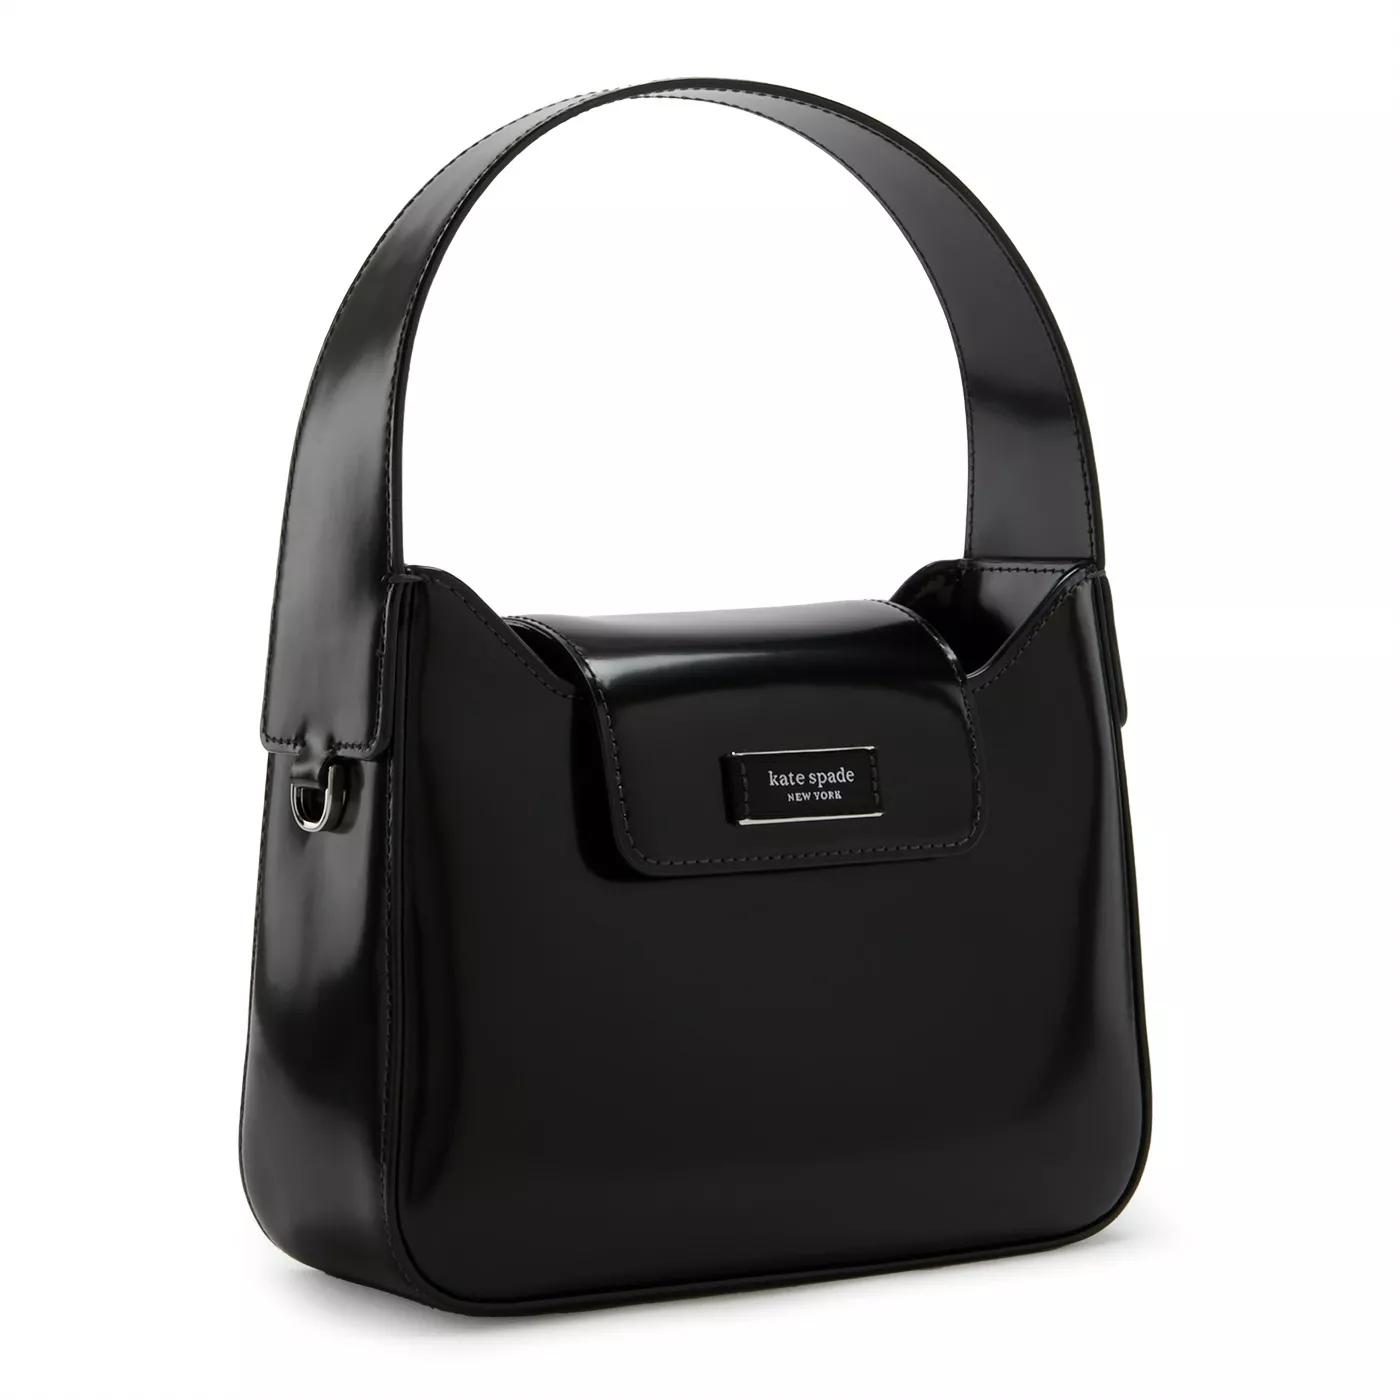 Kate spade new york Crossbody bags Schwarze Leder Handtasche K881 in zwart